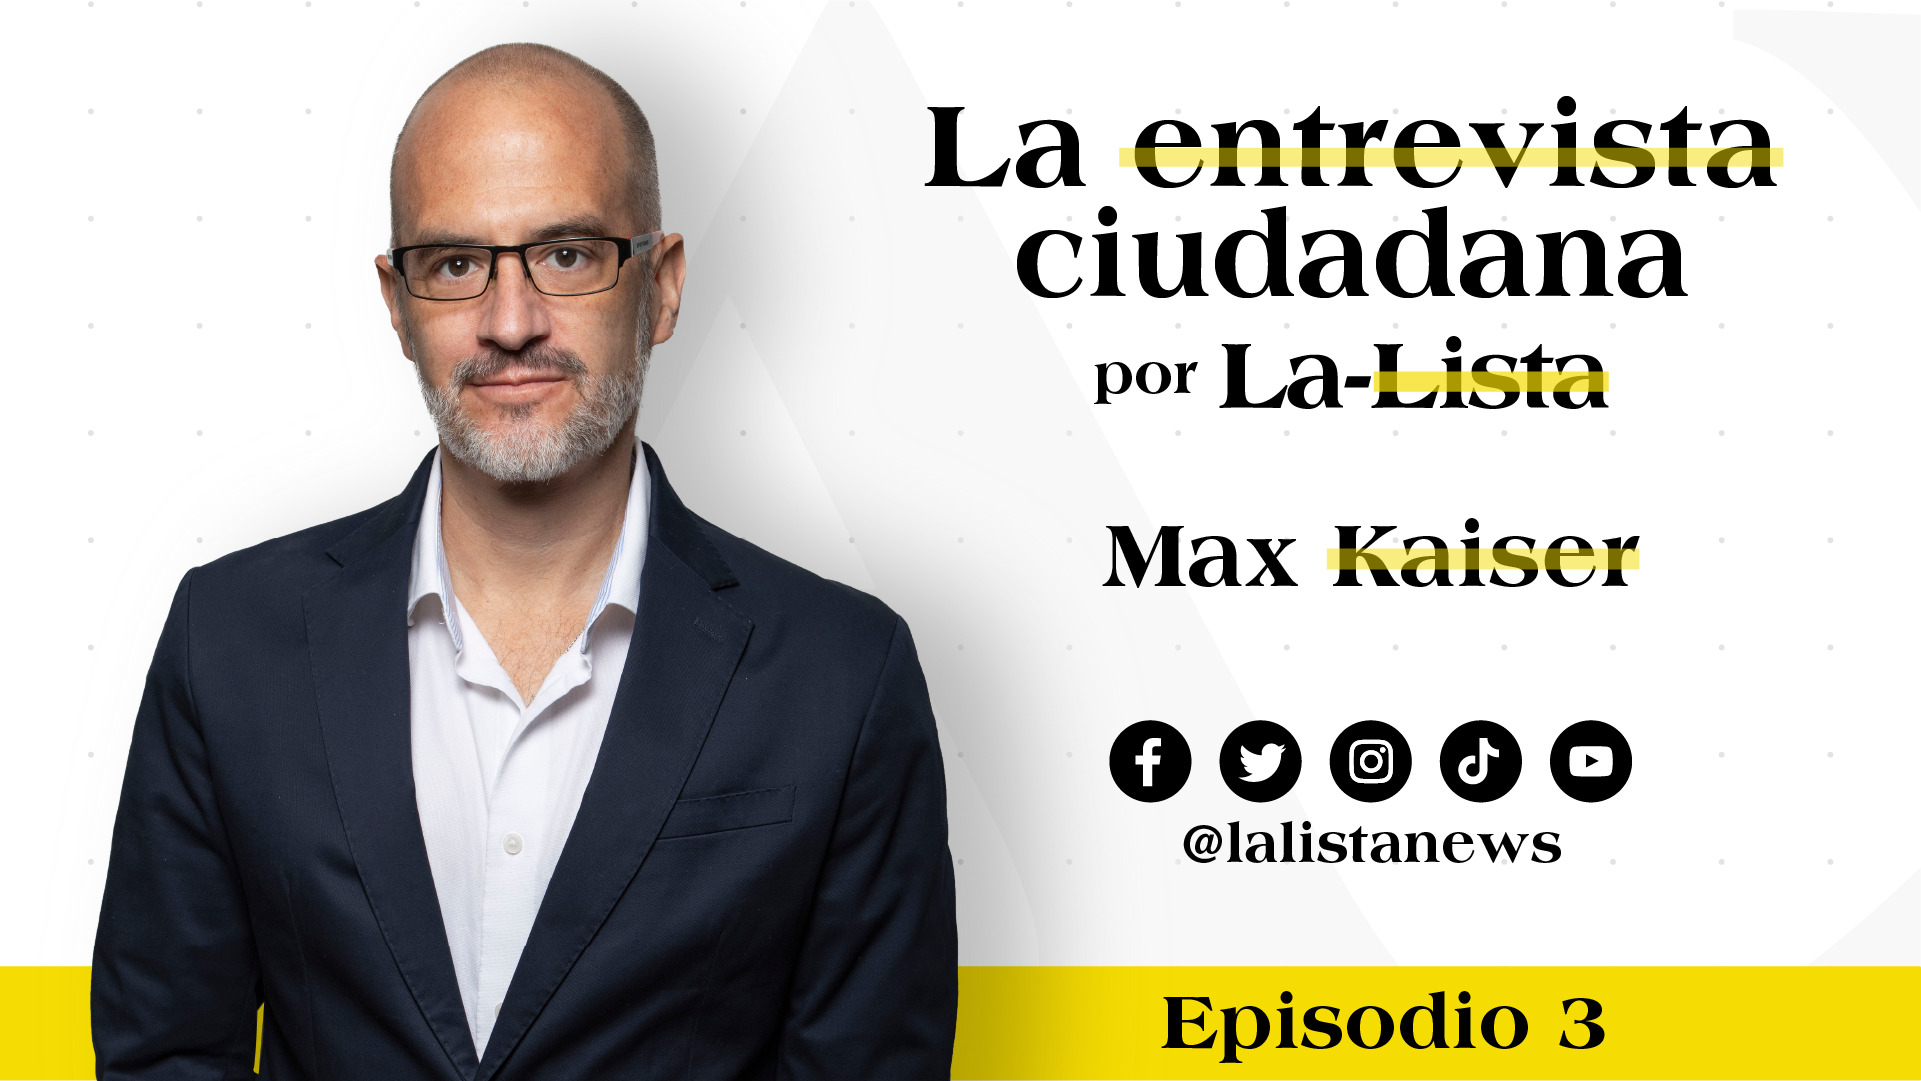 La entrevista ciudadana​ con Max Kaiser: Ana Lilia Herrera